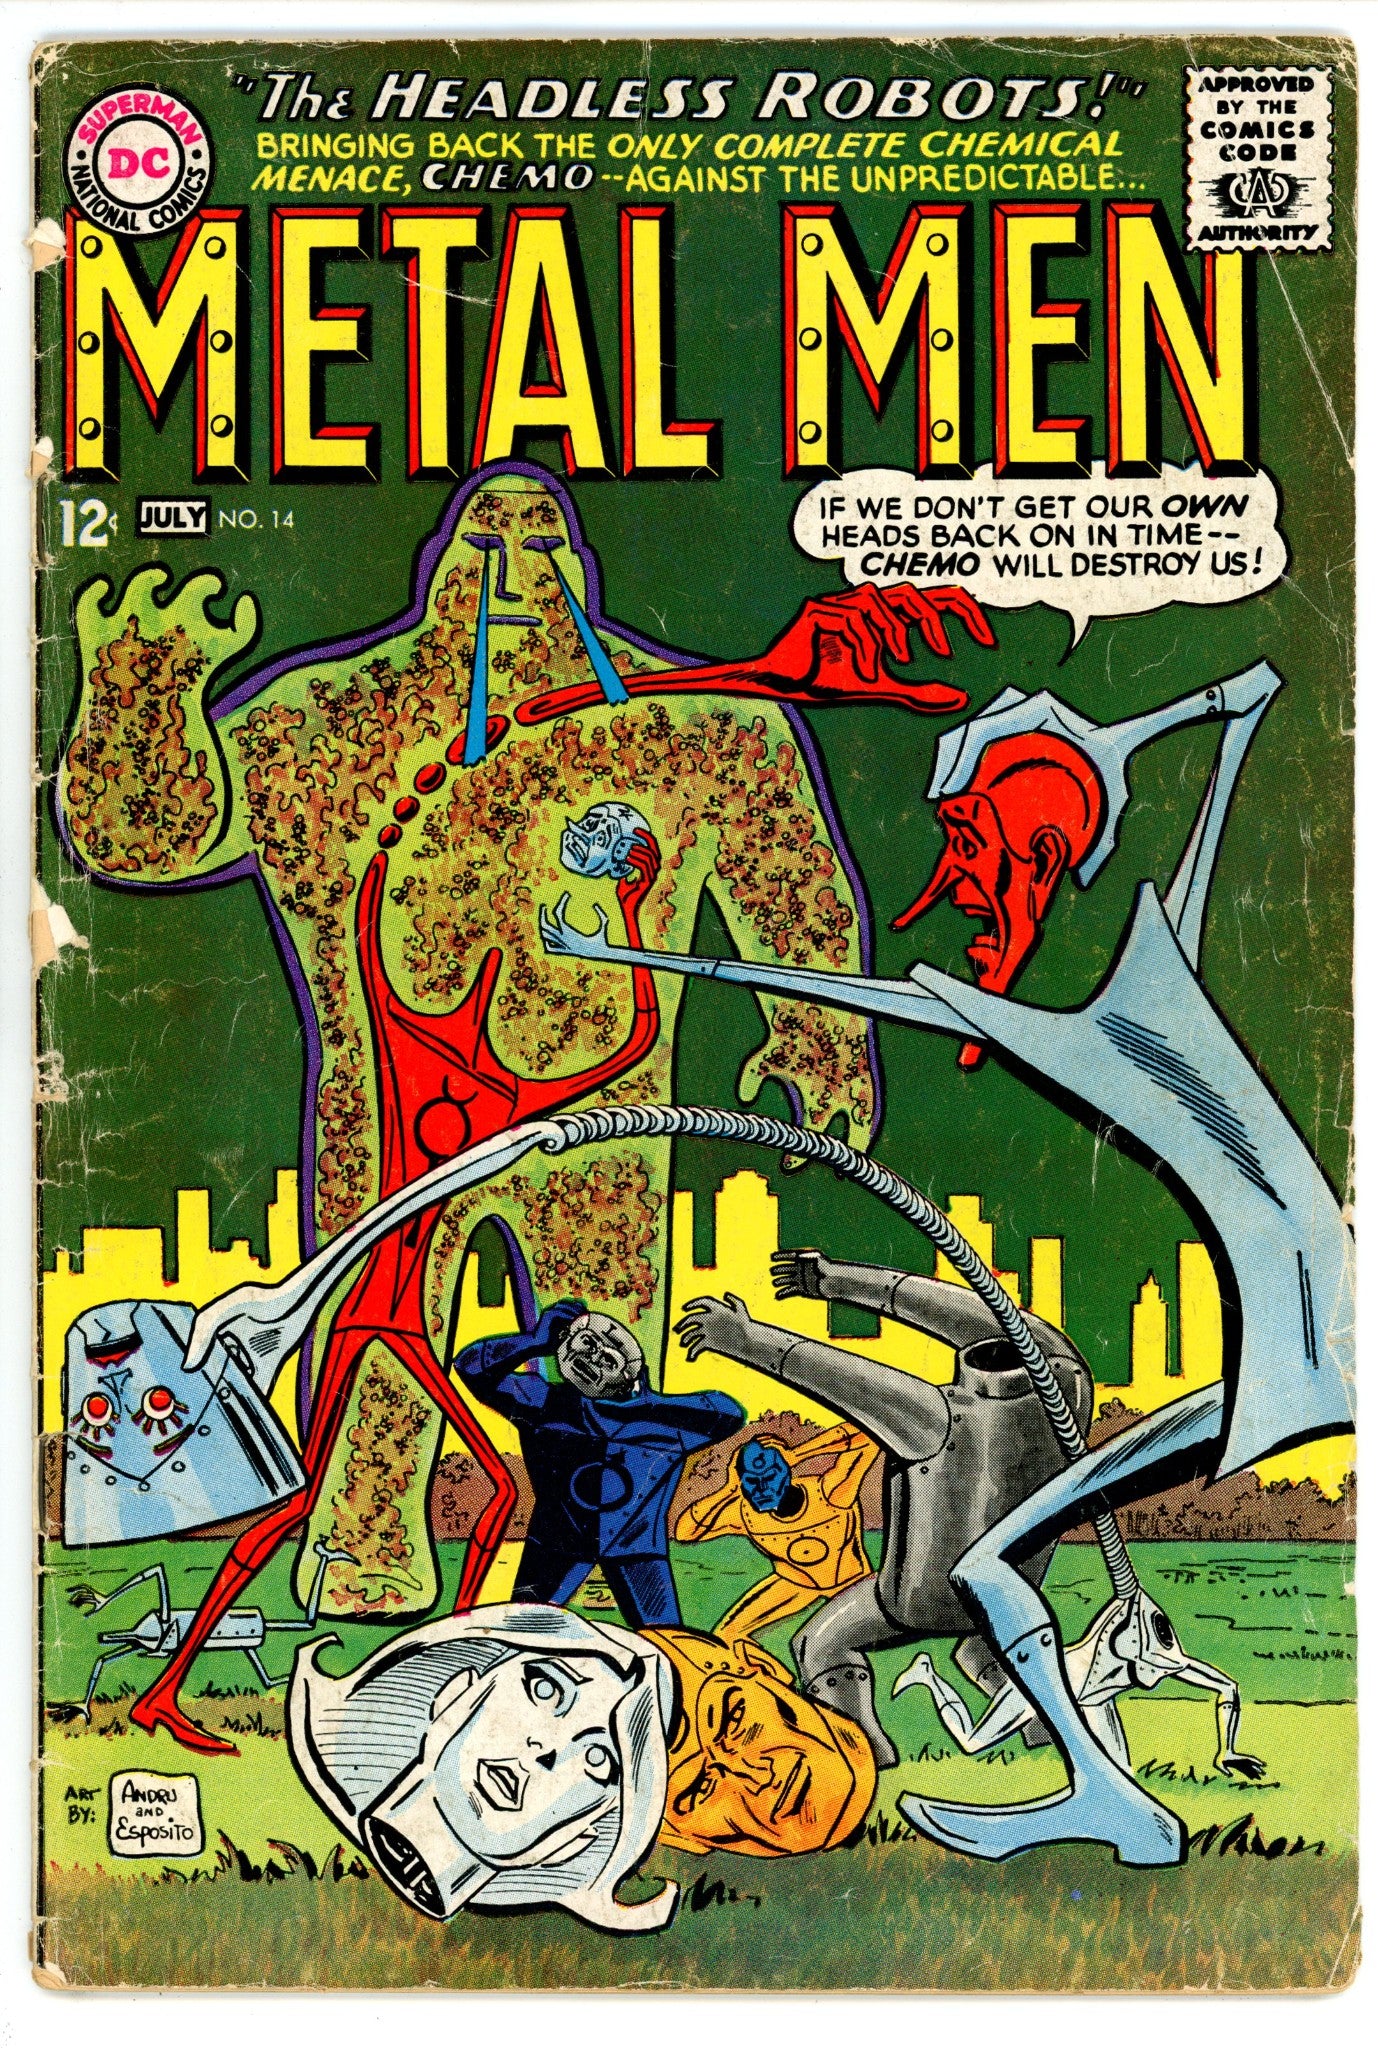 Metal Men Vol 1 14 VG- (3.5) (1965) 